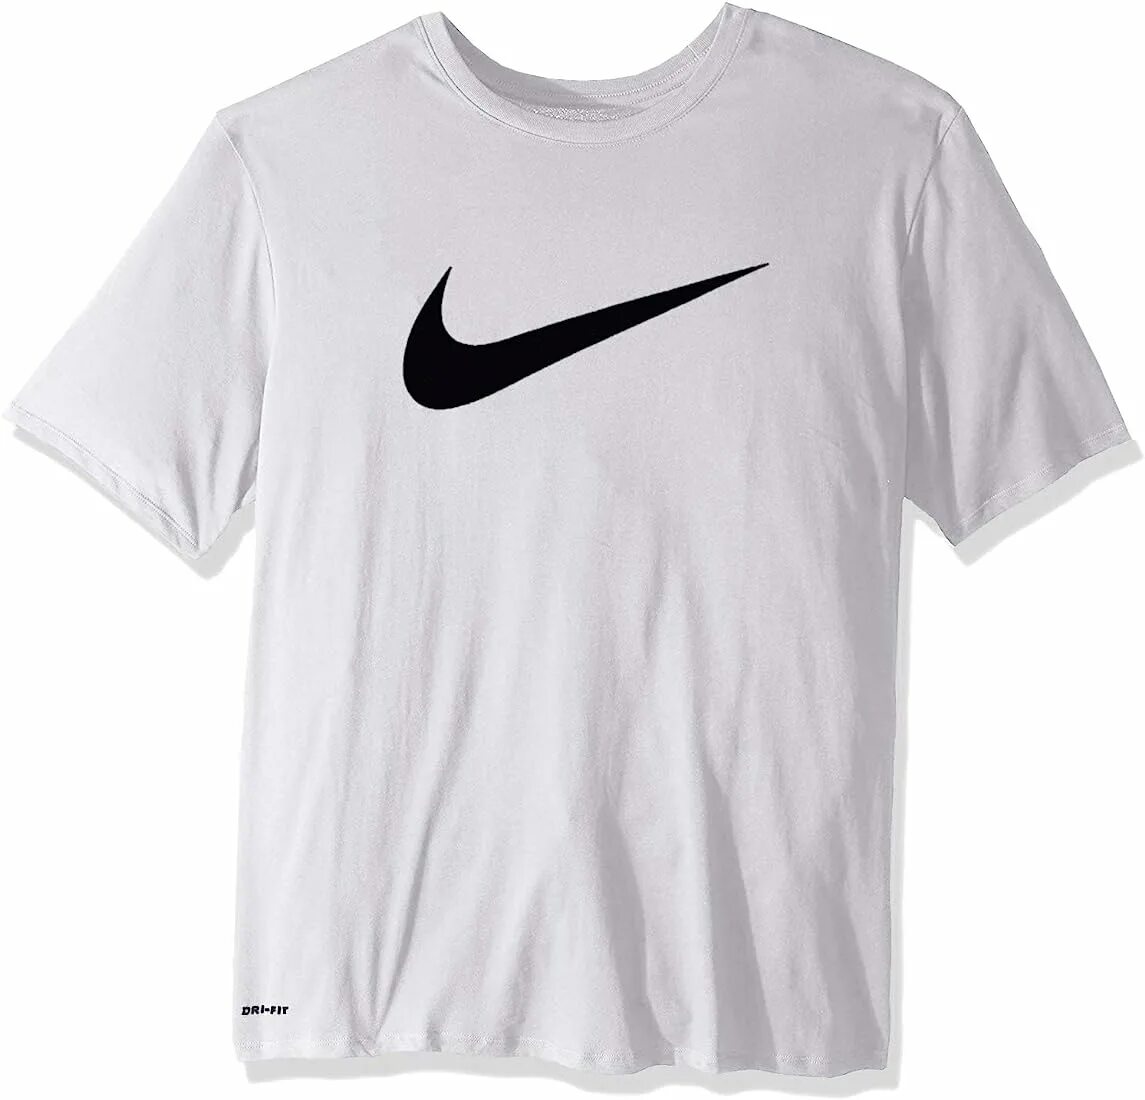 Nike Dri Fit Swoosh. The Nike Tee Dri-Fit. Футболка Nike Swoosh белая. Nike big Swoosh футболка мужская.